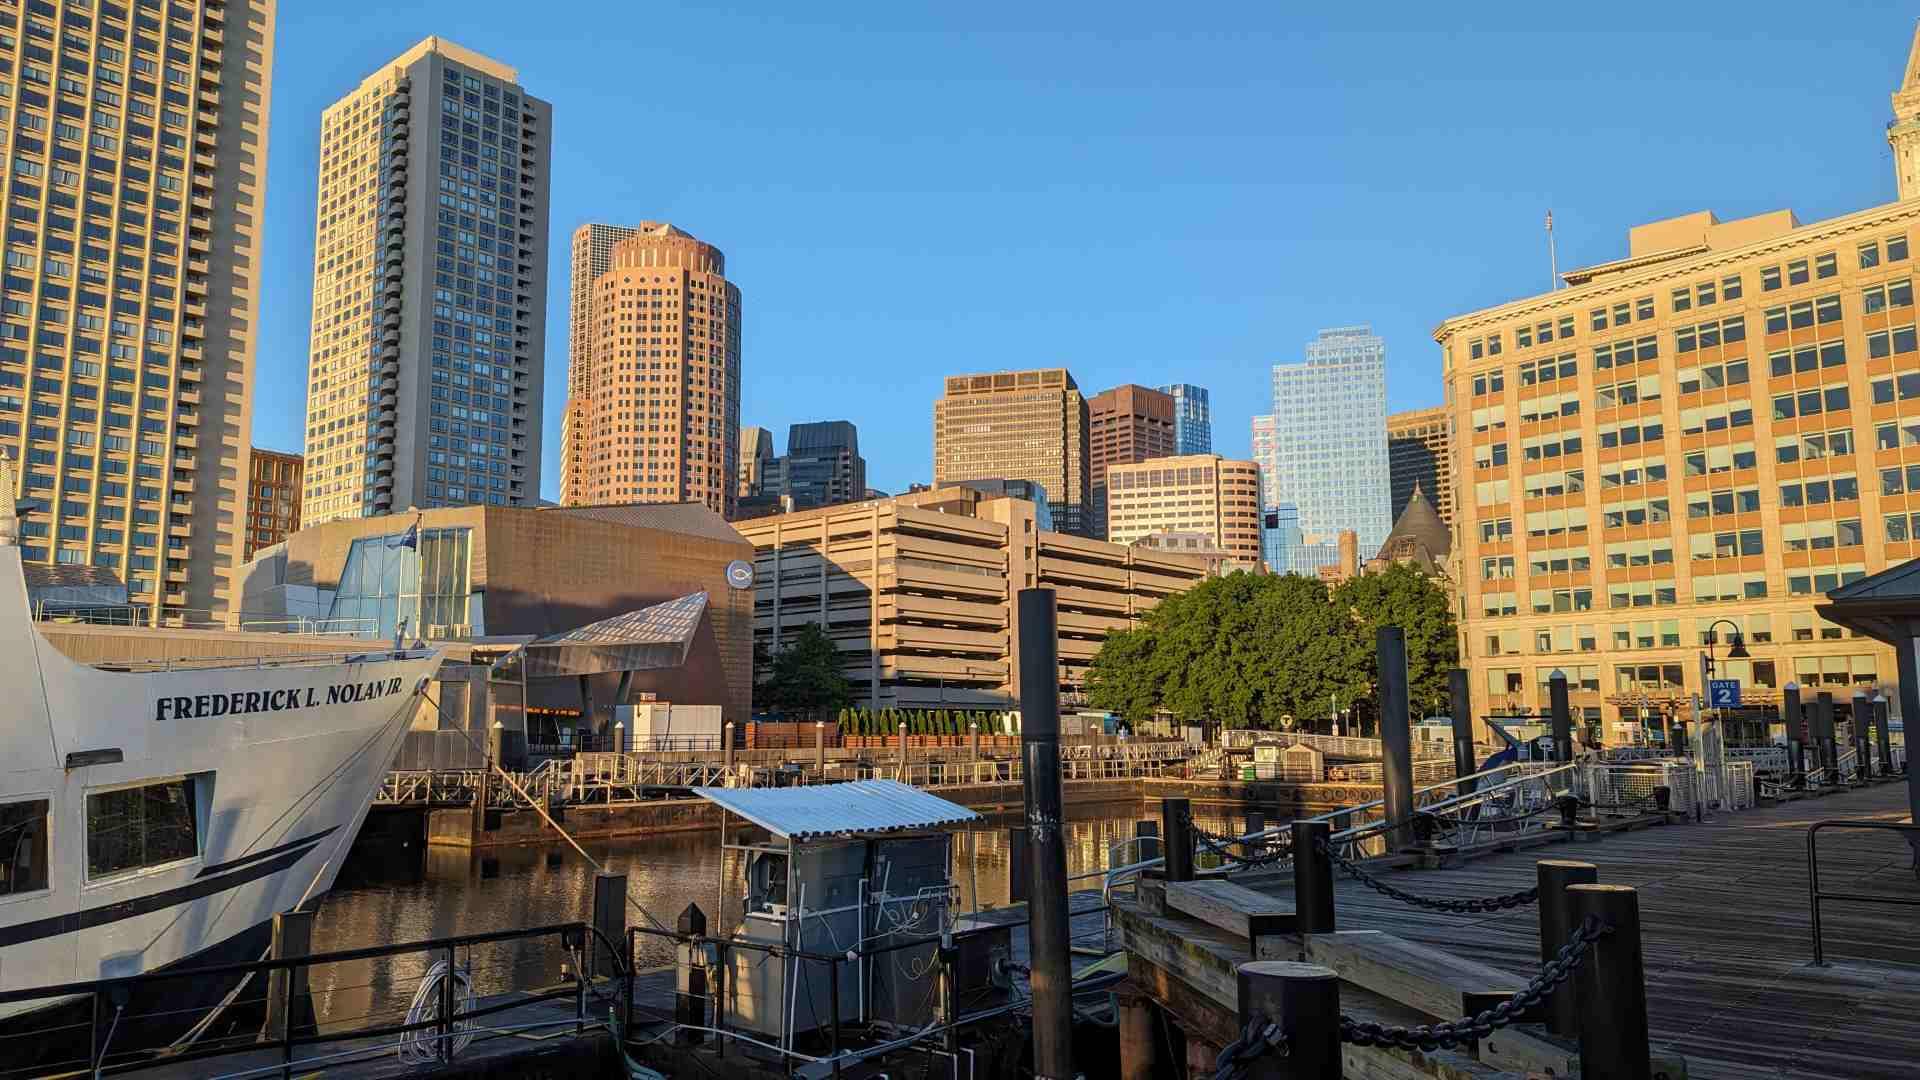 The city of Boston